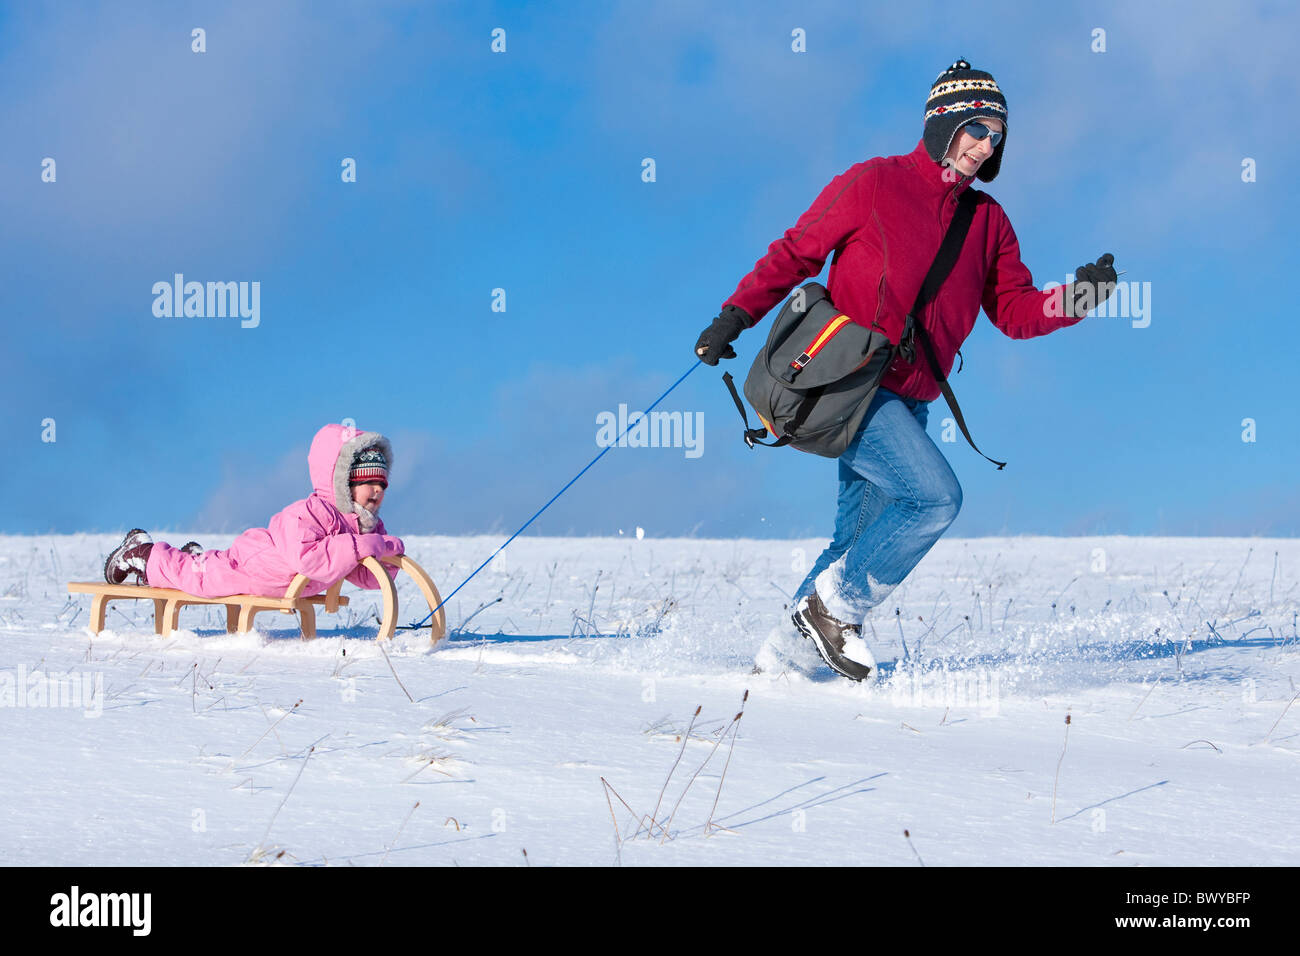 Femme fille enfant tirant sur le traîneau en bois en hiver paysage, Dobel, Forêt Noire, Gerrmany Banque D'Images